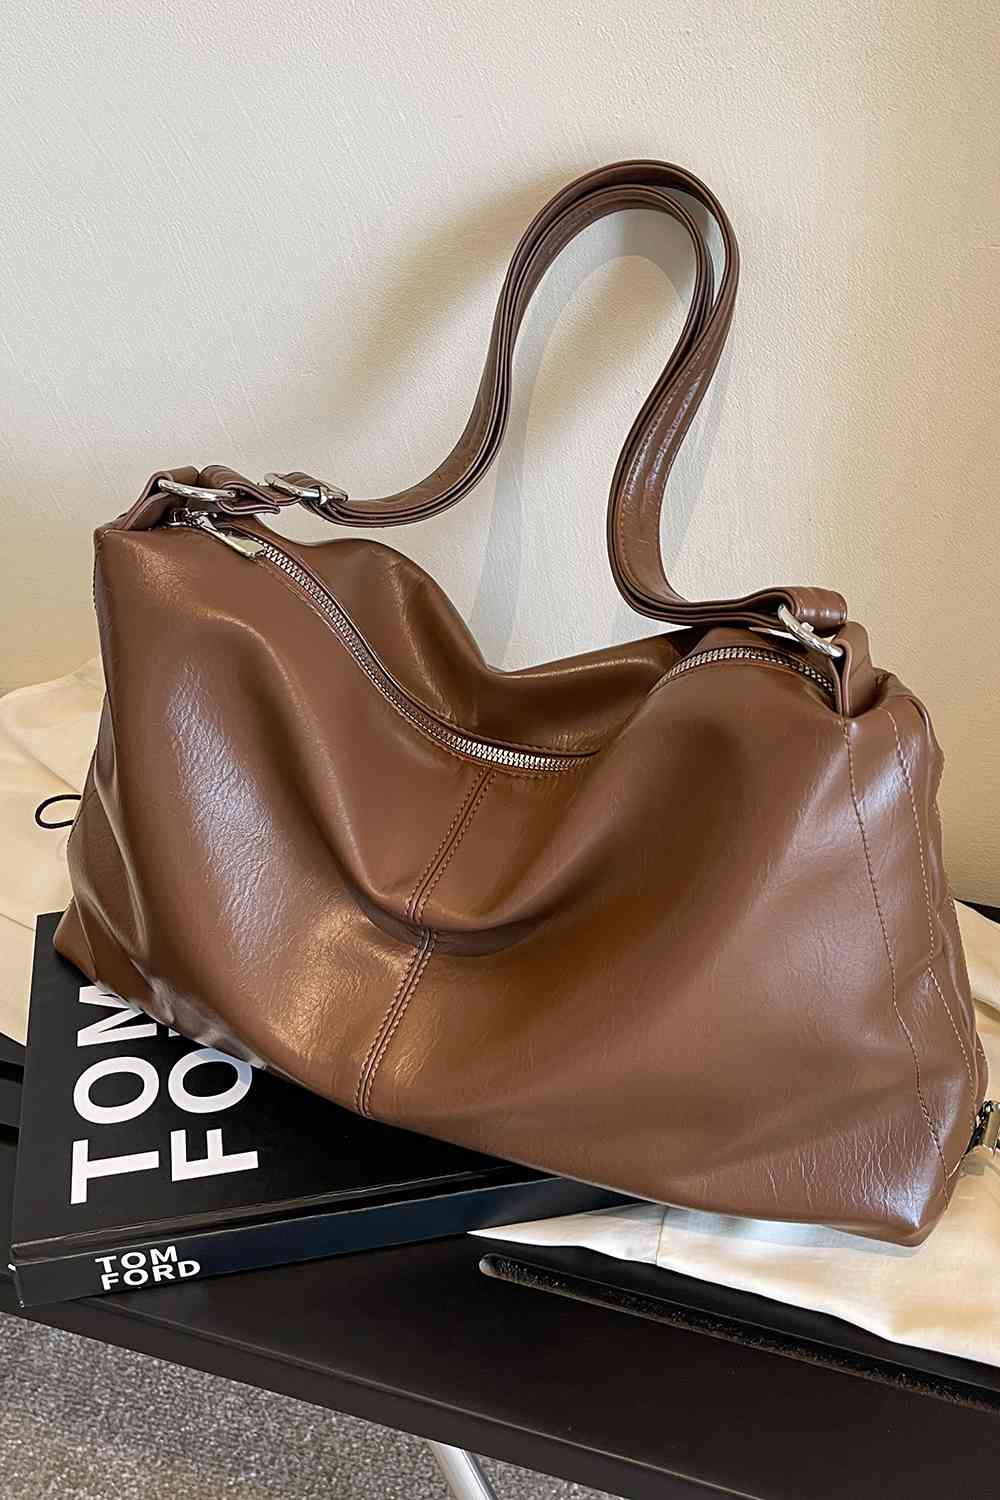 PU Leather Shoulder Bag - Just Enuff Sexy